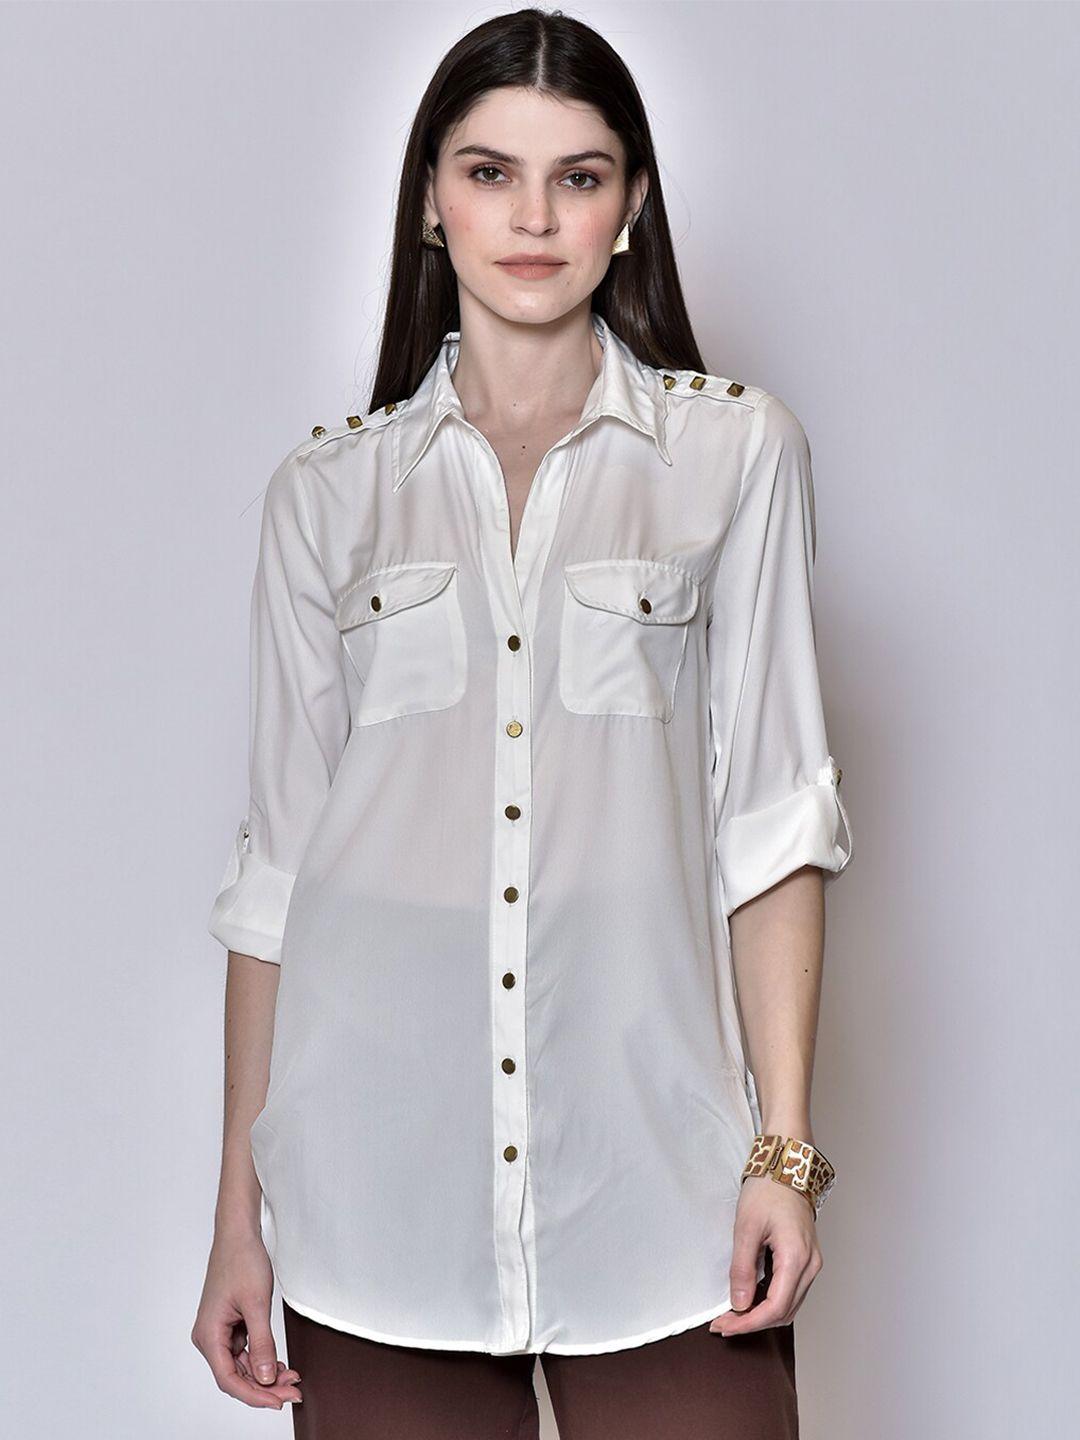 250 designs women white casual shirt